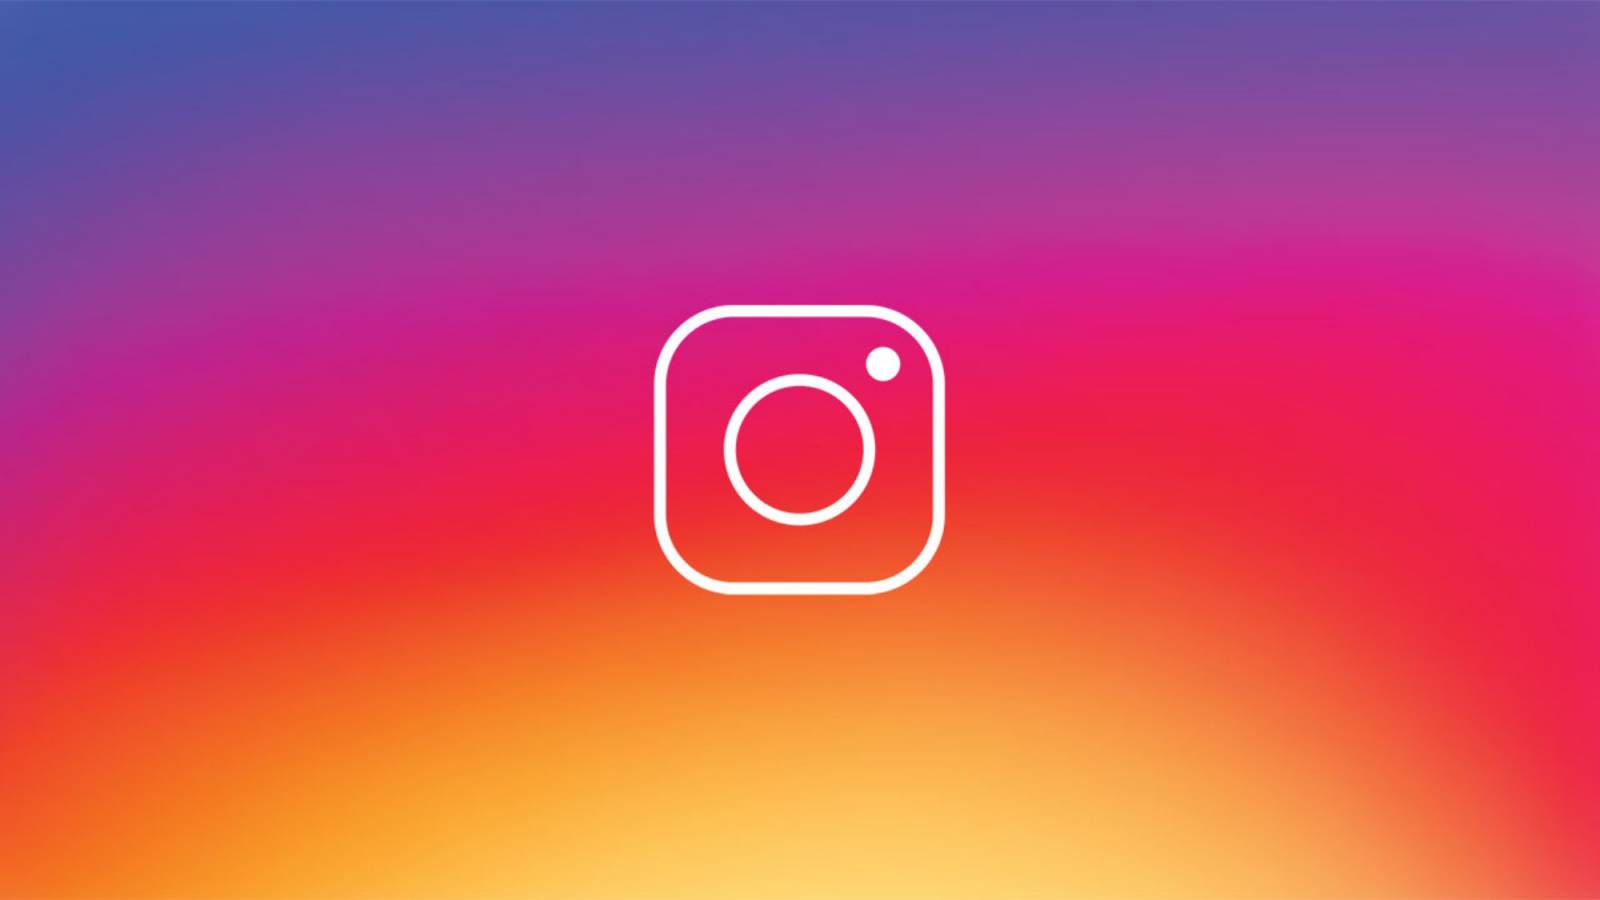 Instagram lets SECRETLY BLOCK ANNOYING people